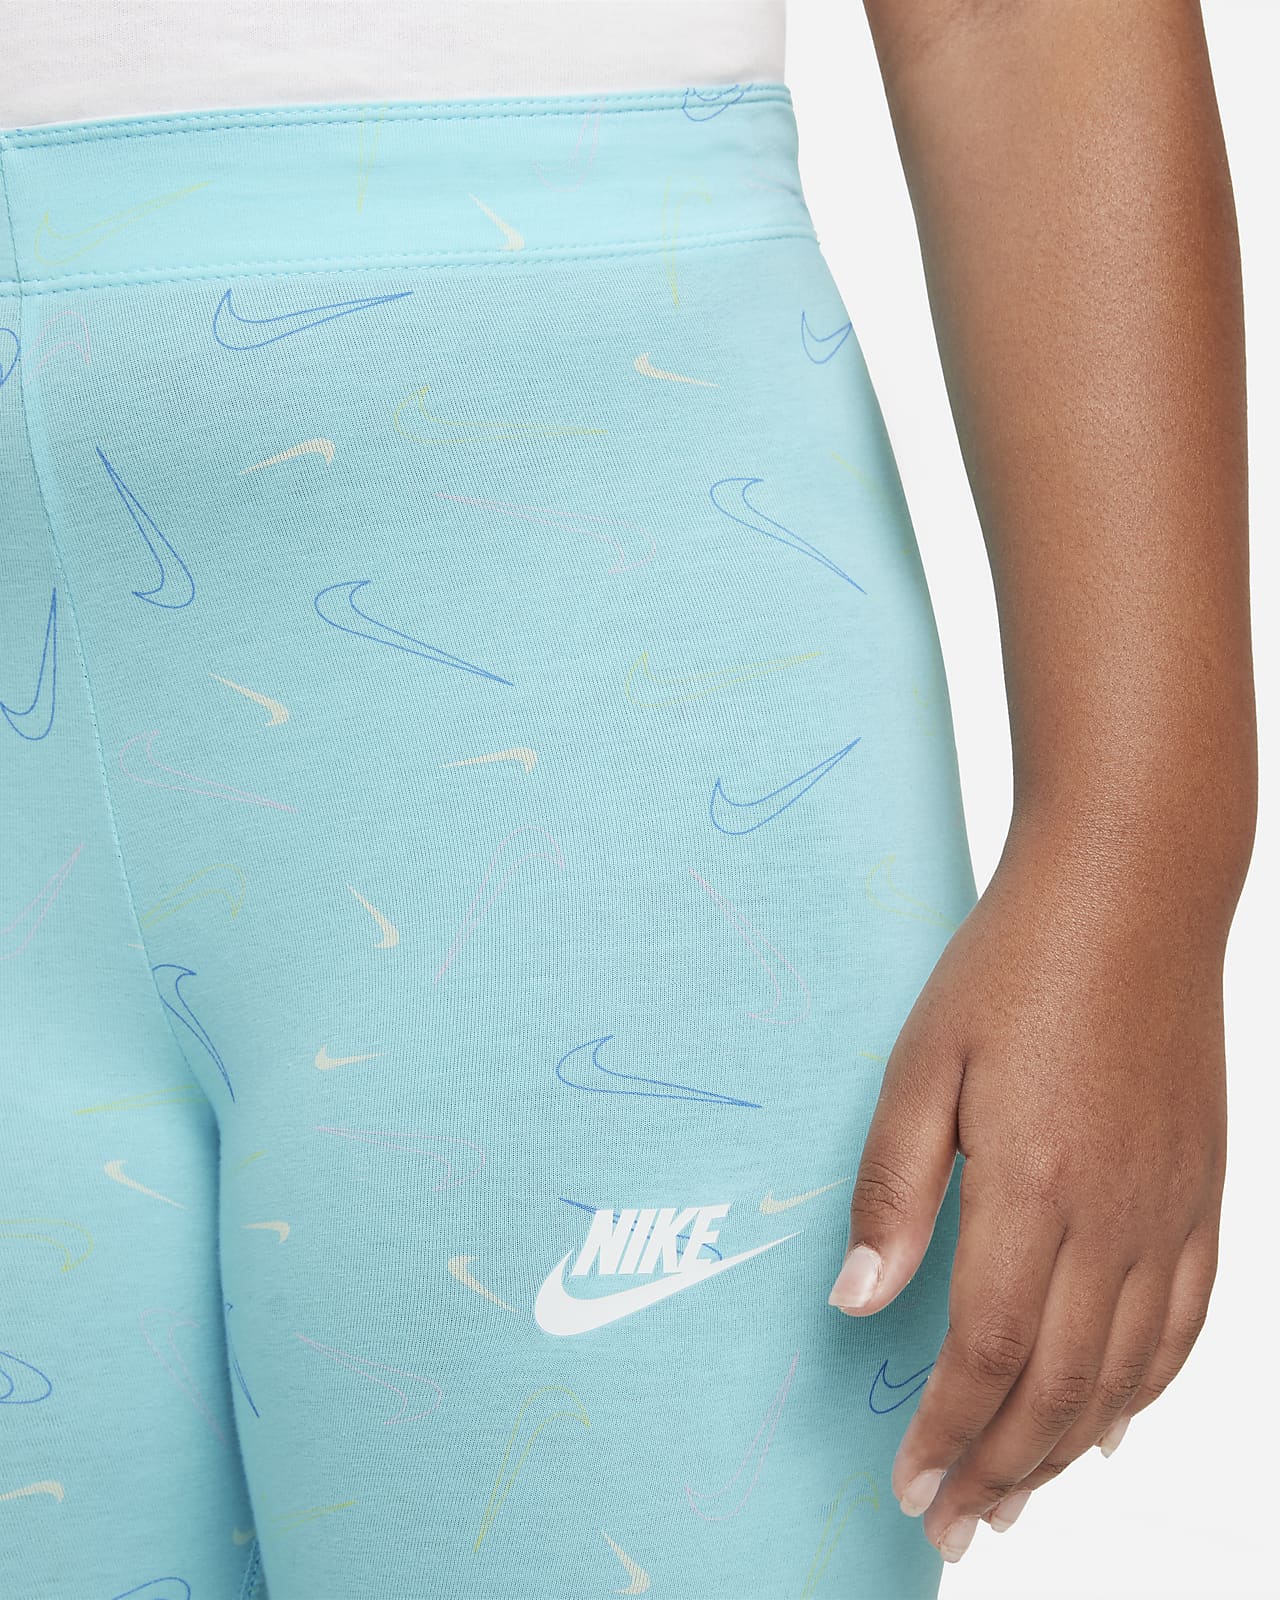 Kids\' (Extended (Girls\') Printed Leggings Big Size). Favorites Sportswear Nike